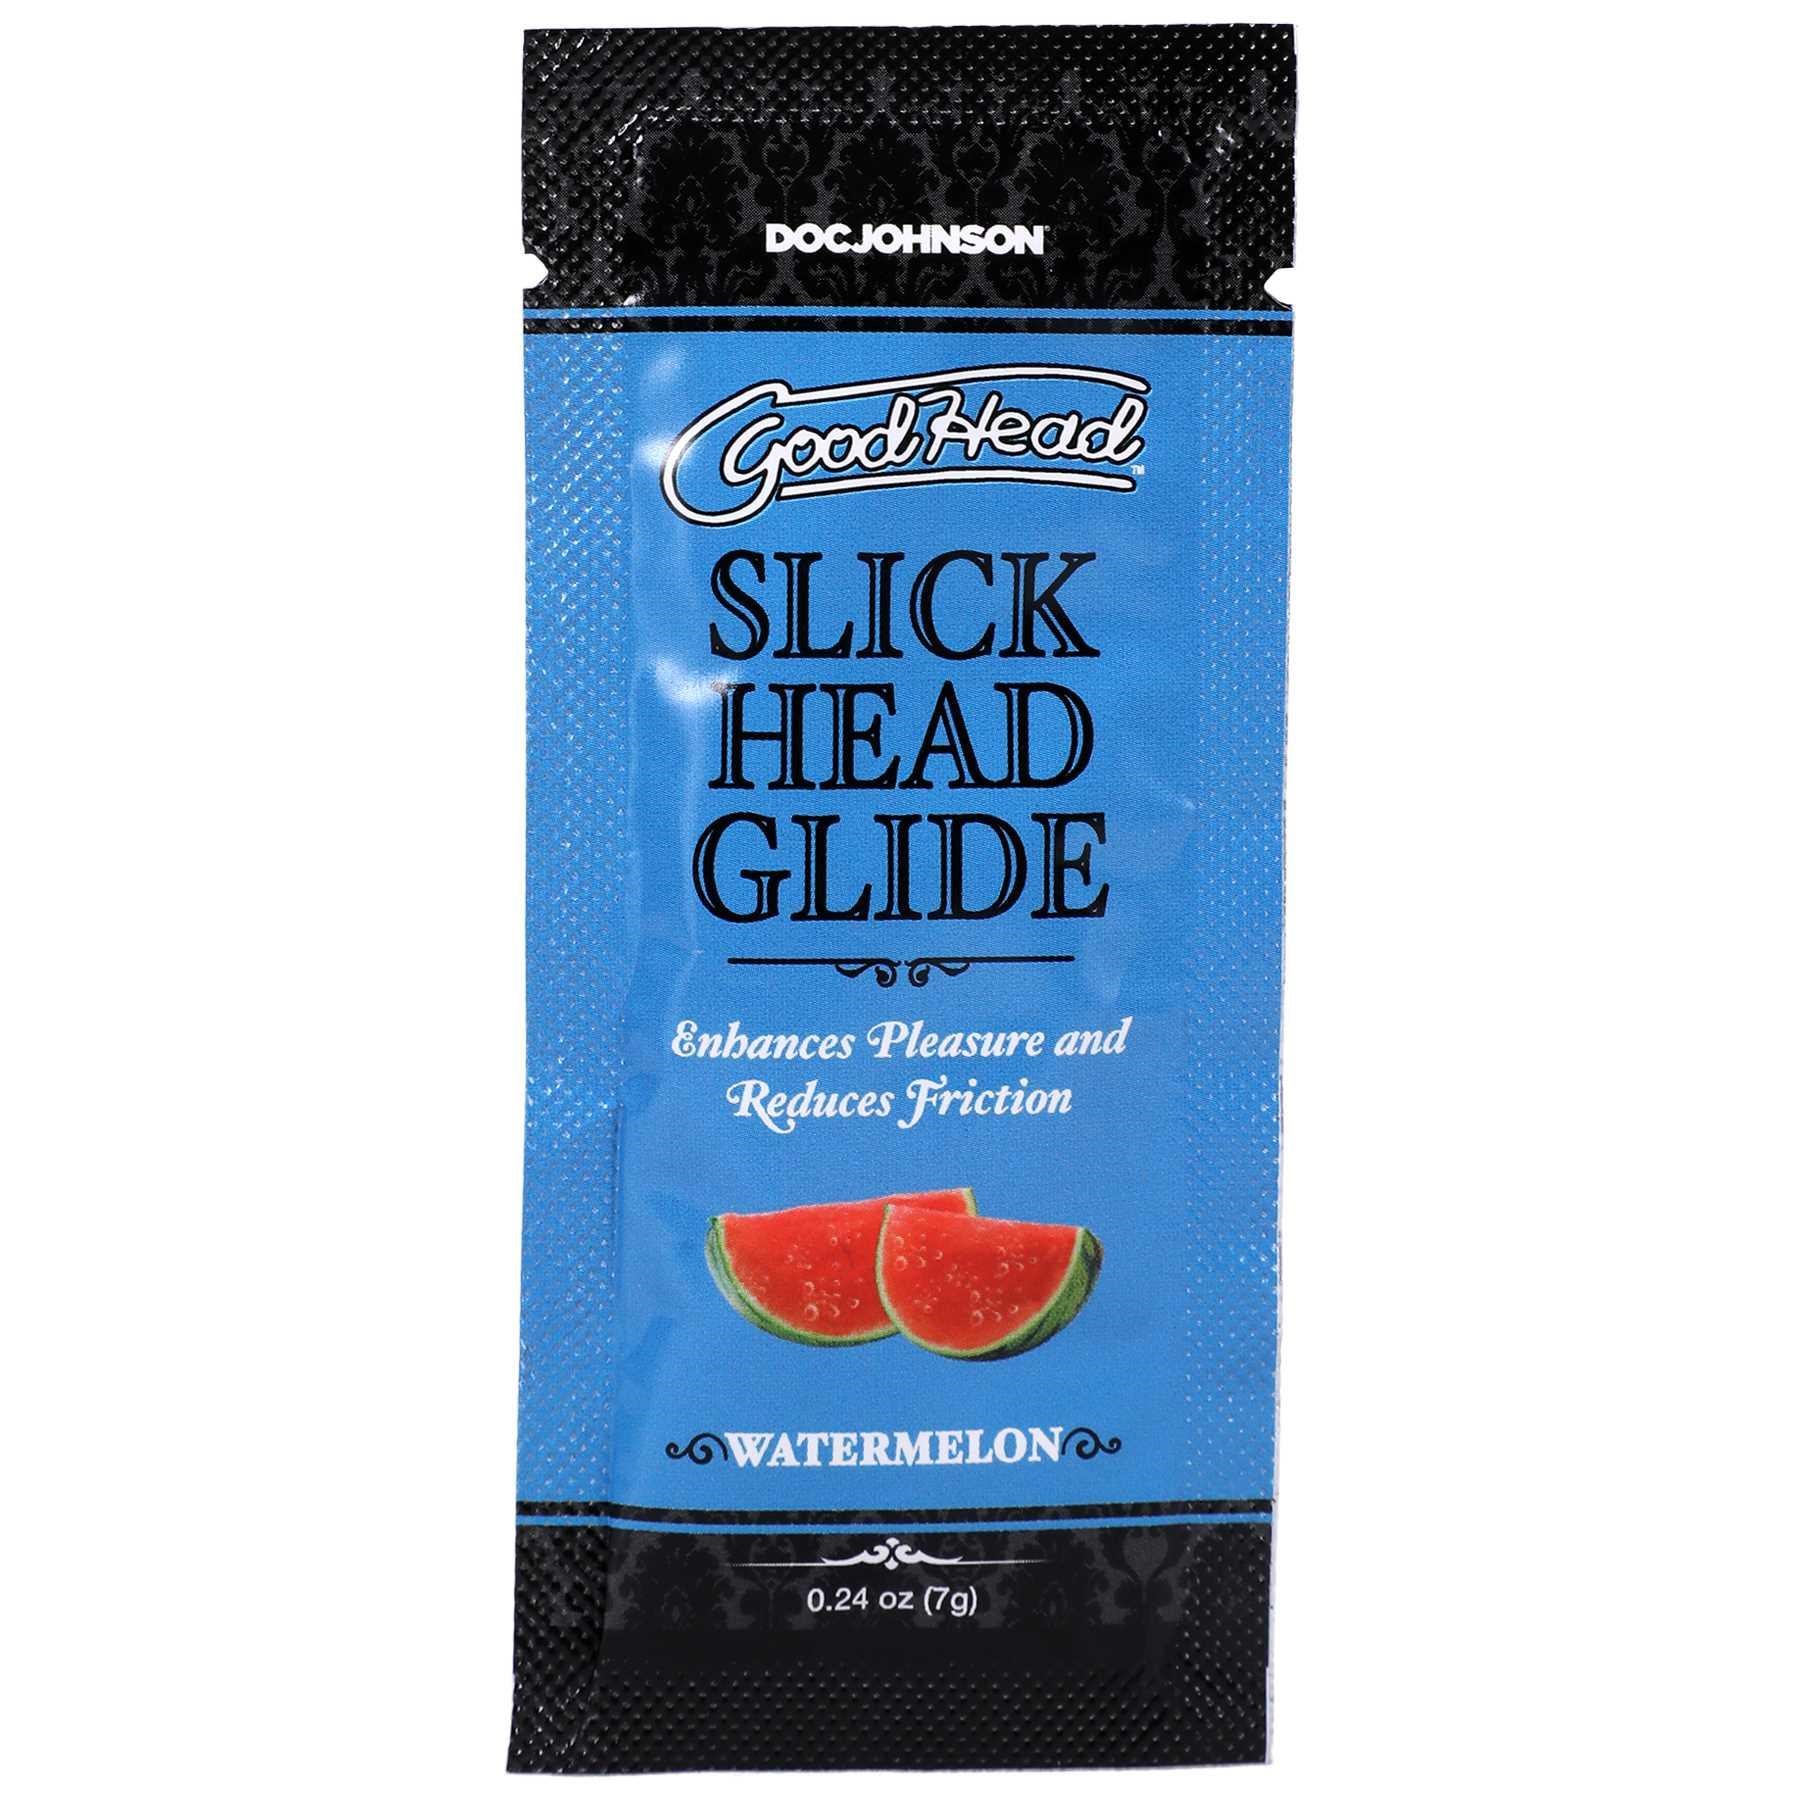 GoodHead - Slick Head Glide -watermelon front of package-  0.24 oz.